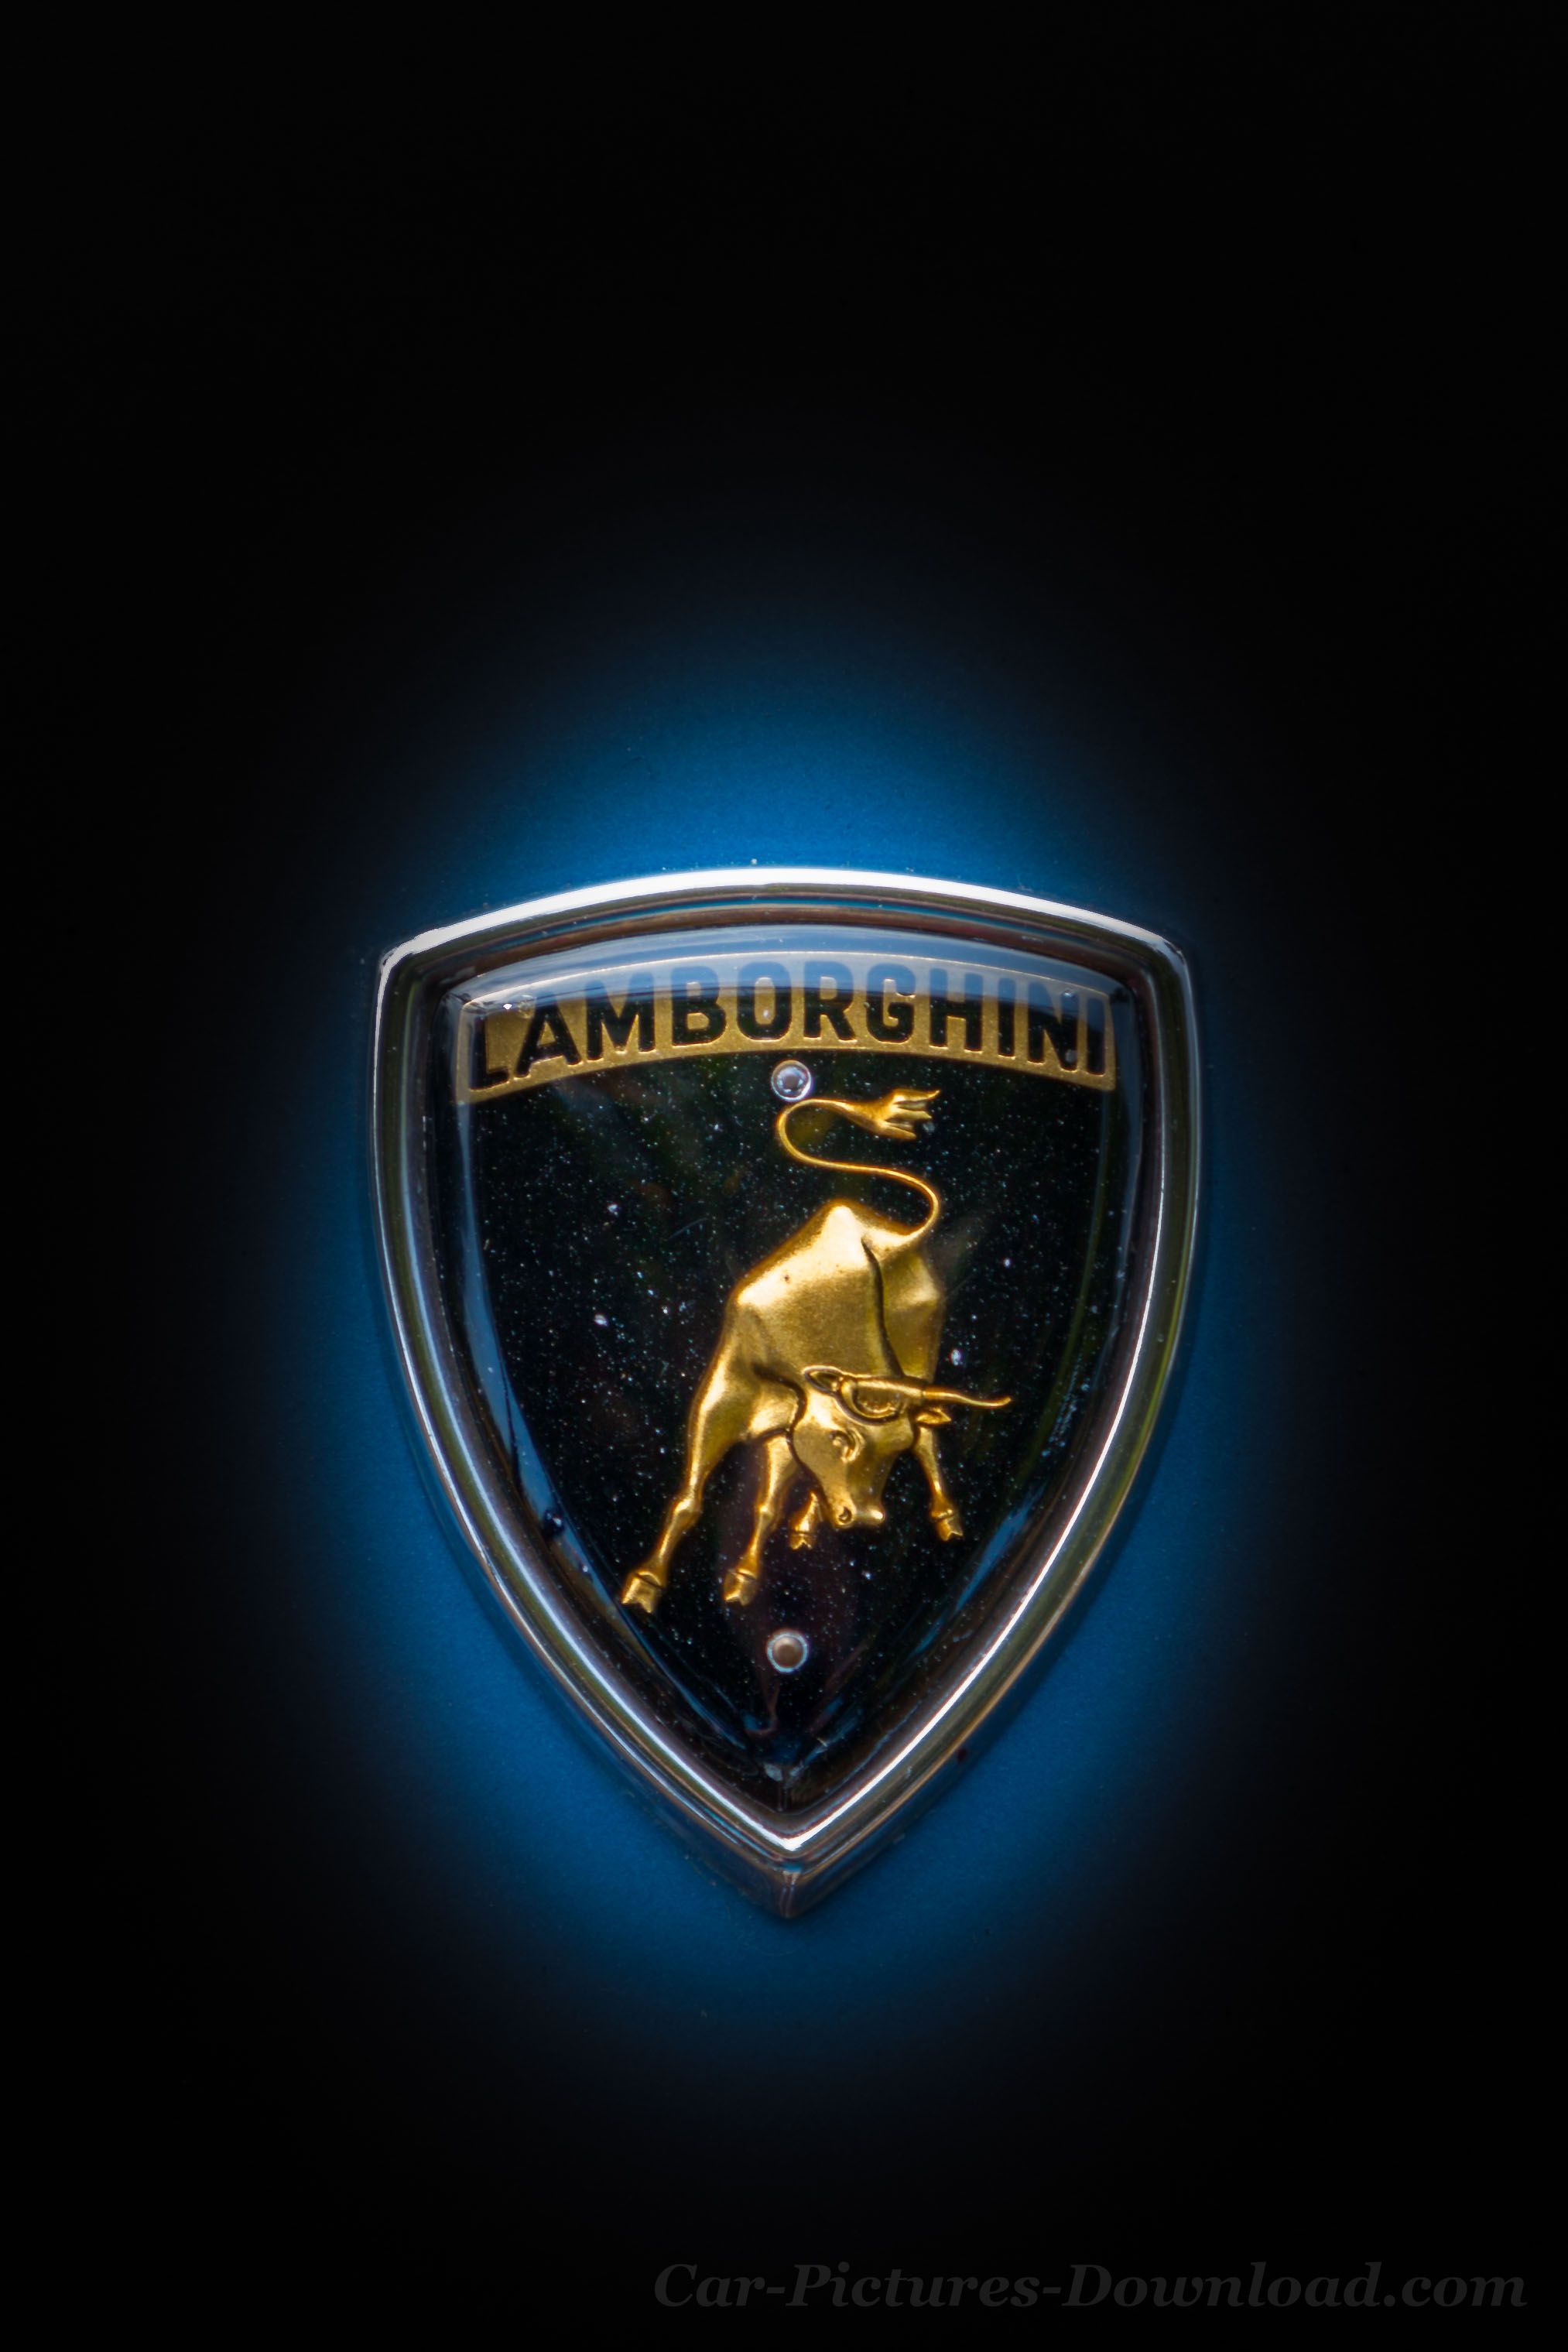 Imágenes de fondo de pantalla de Lamborghini - Pantallas 4K Ultra HD - Descarga gratuita